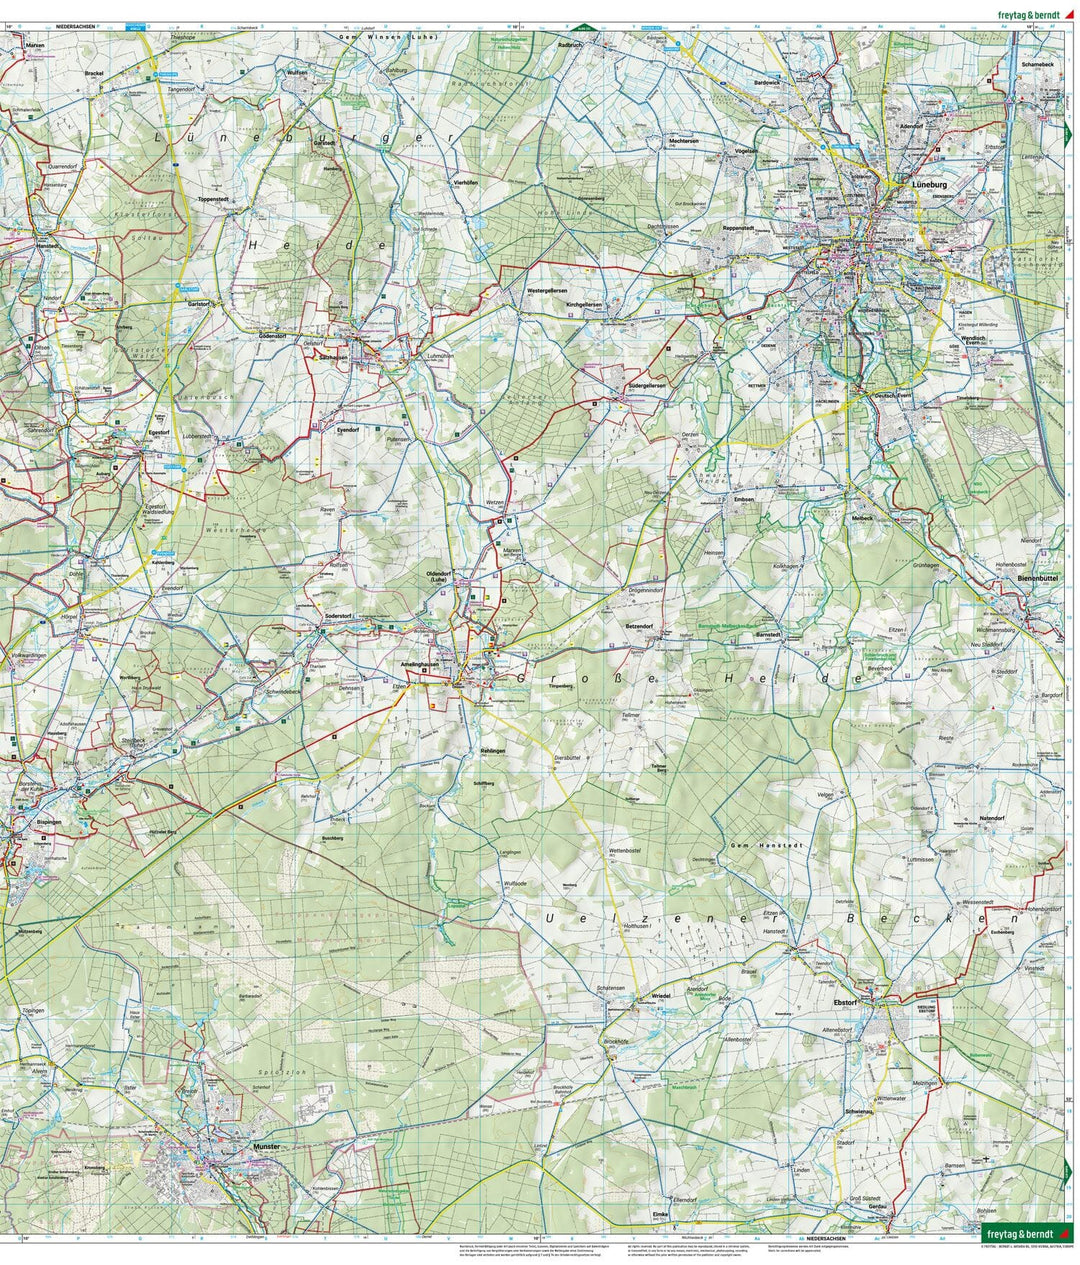 Carte de randonnée et cycliste n° WKD5082- Lüneburger Heide Naturpark | Freytag & Berndt carte pliée Freytag & Berndt 